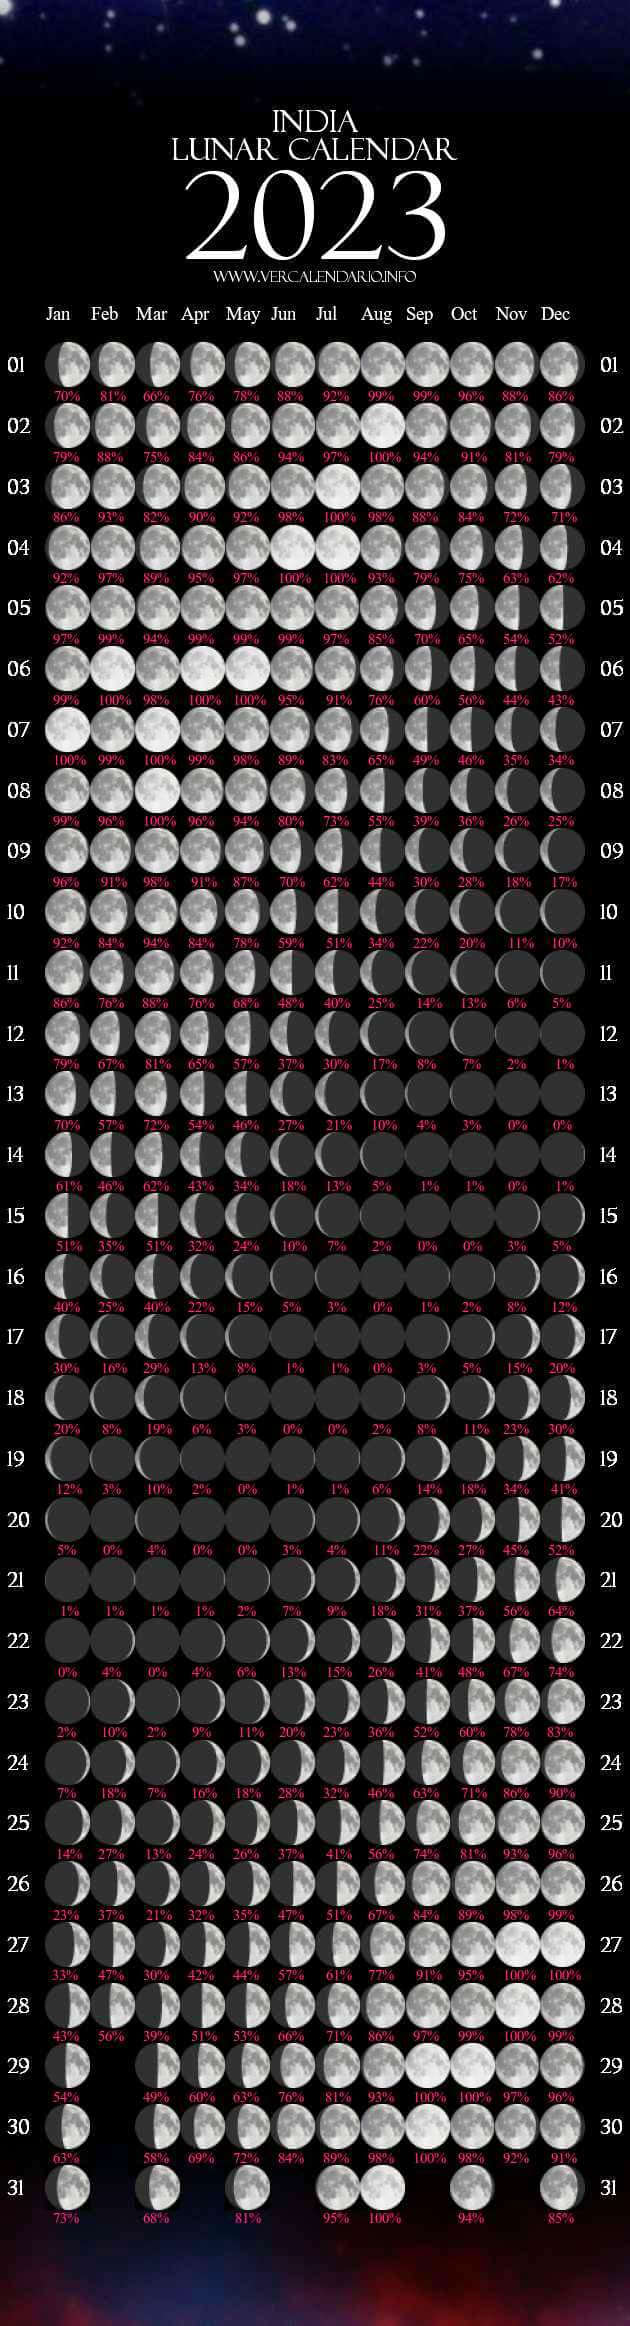 moon phases 2023 calendar